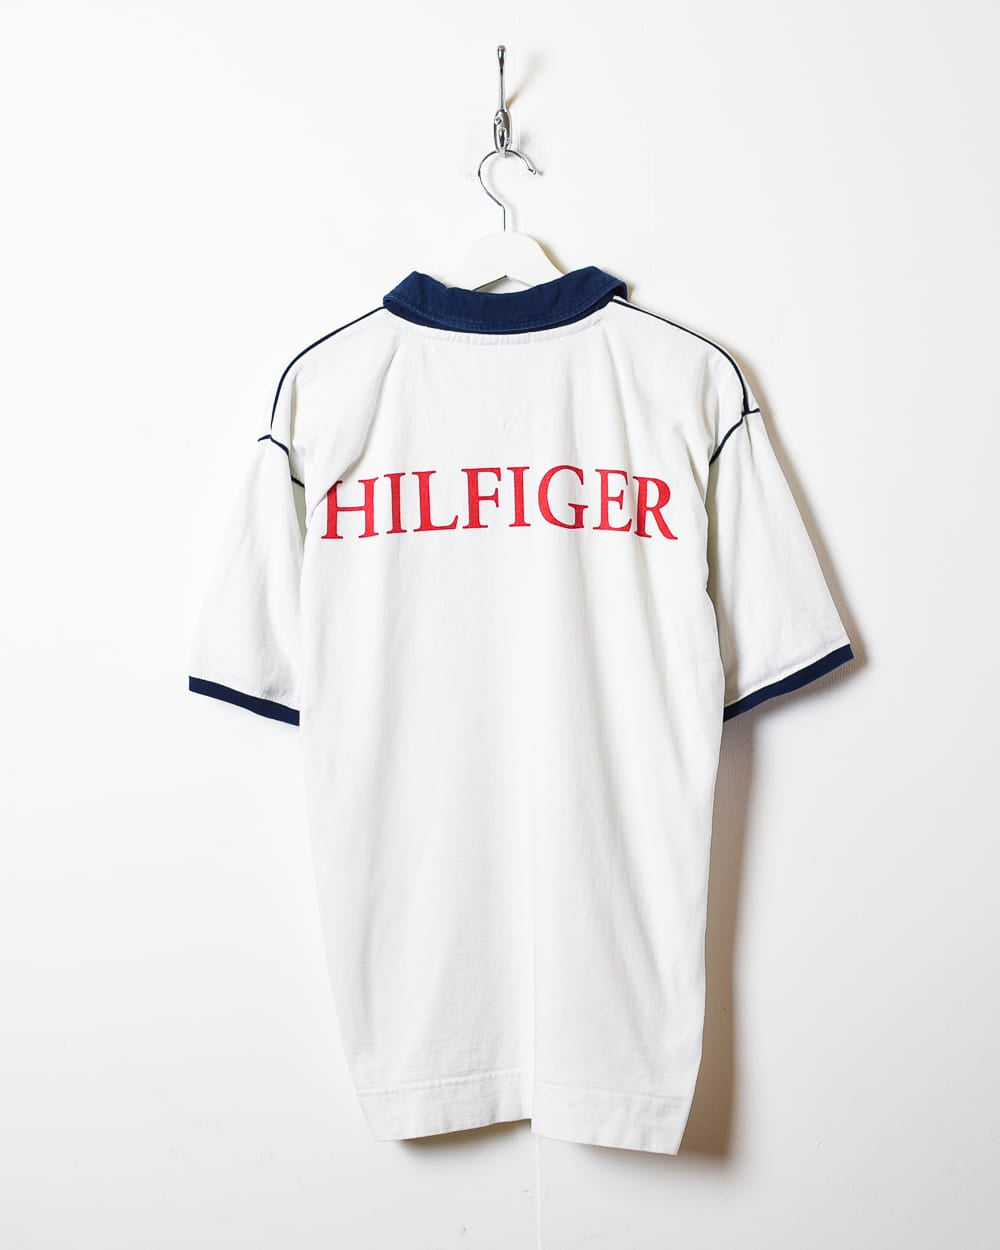 White Tommy Hilfiger Athletics Collared T-Shirt - Medium